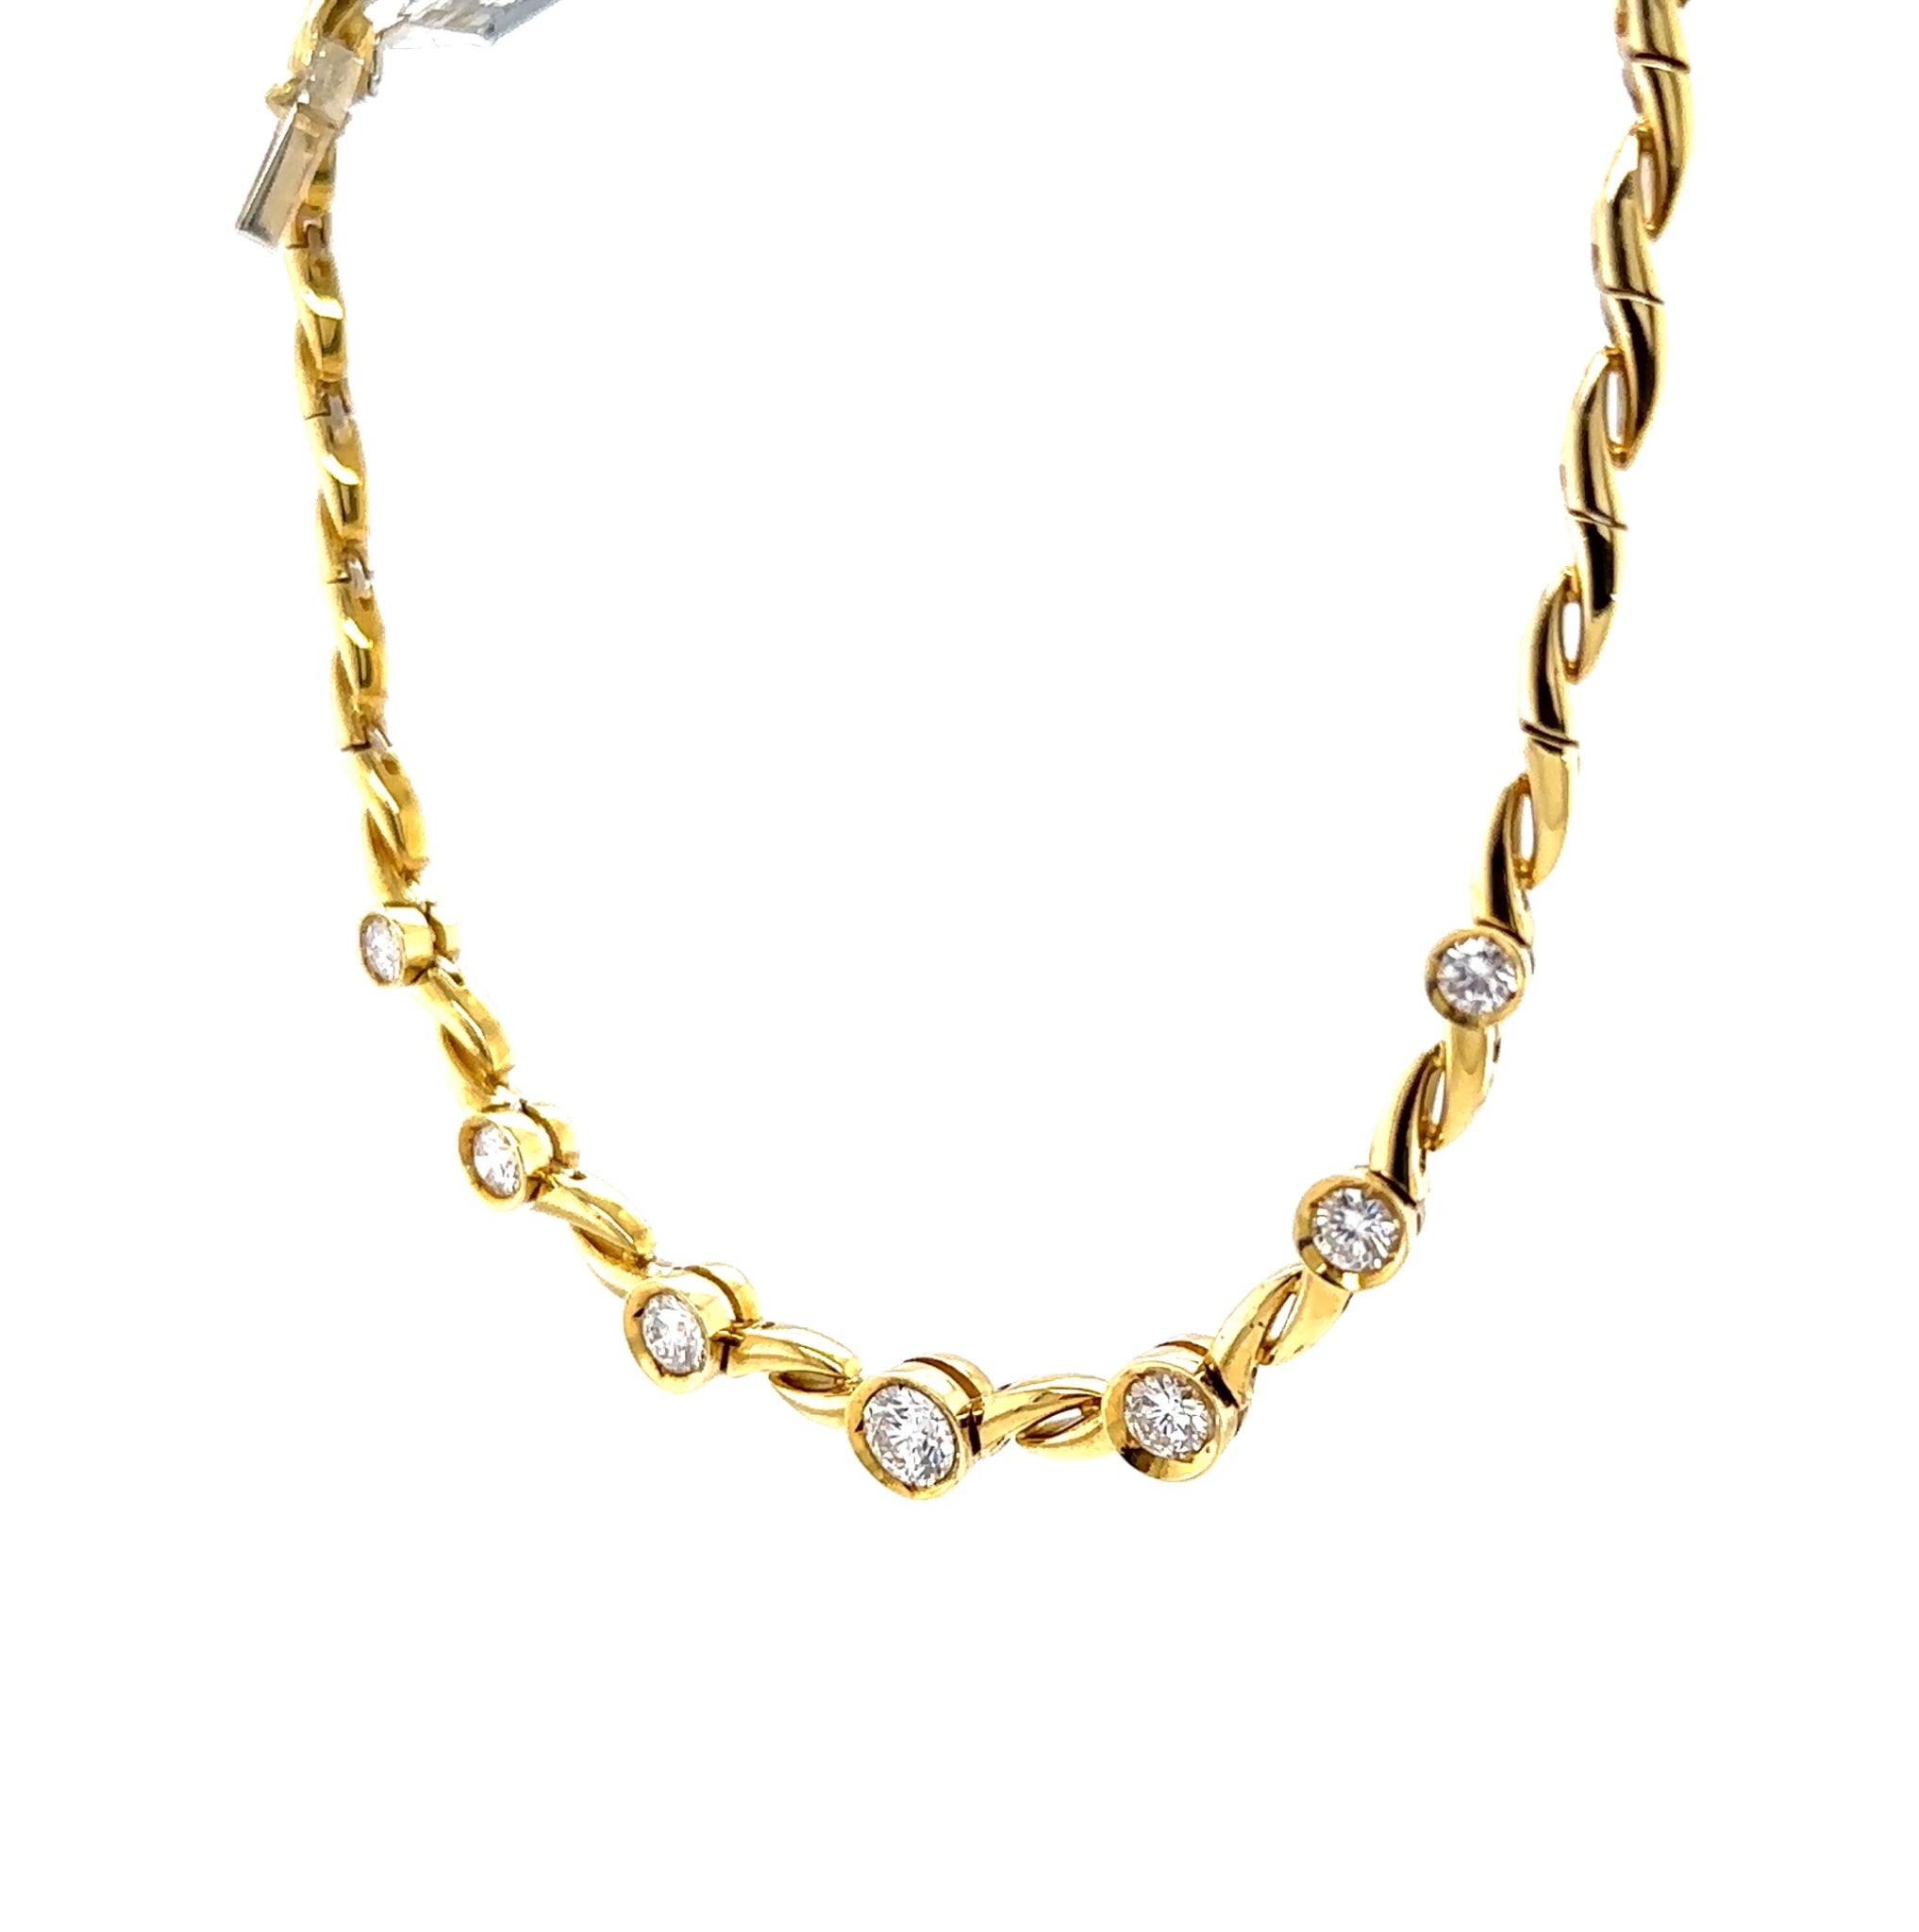 18KY 7 Diamond Twisted Link Fashion Necklace